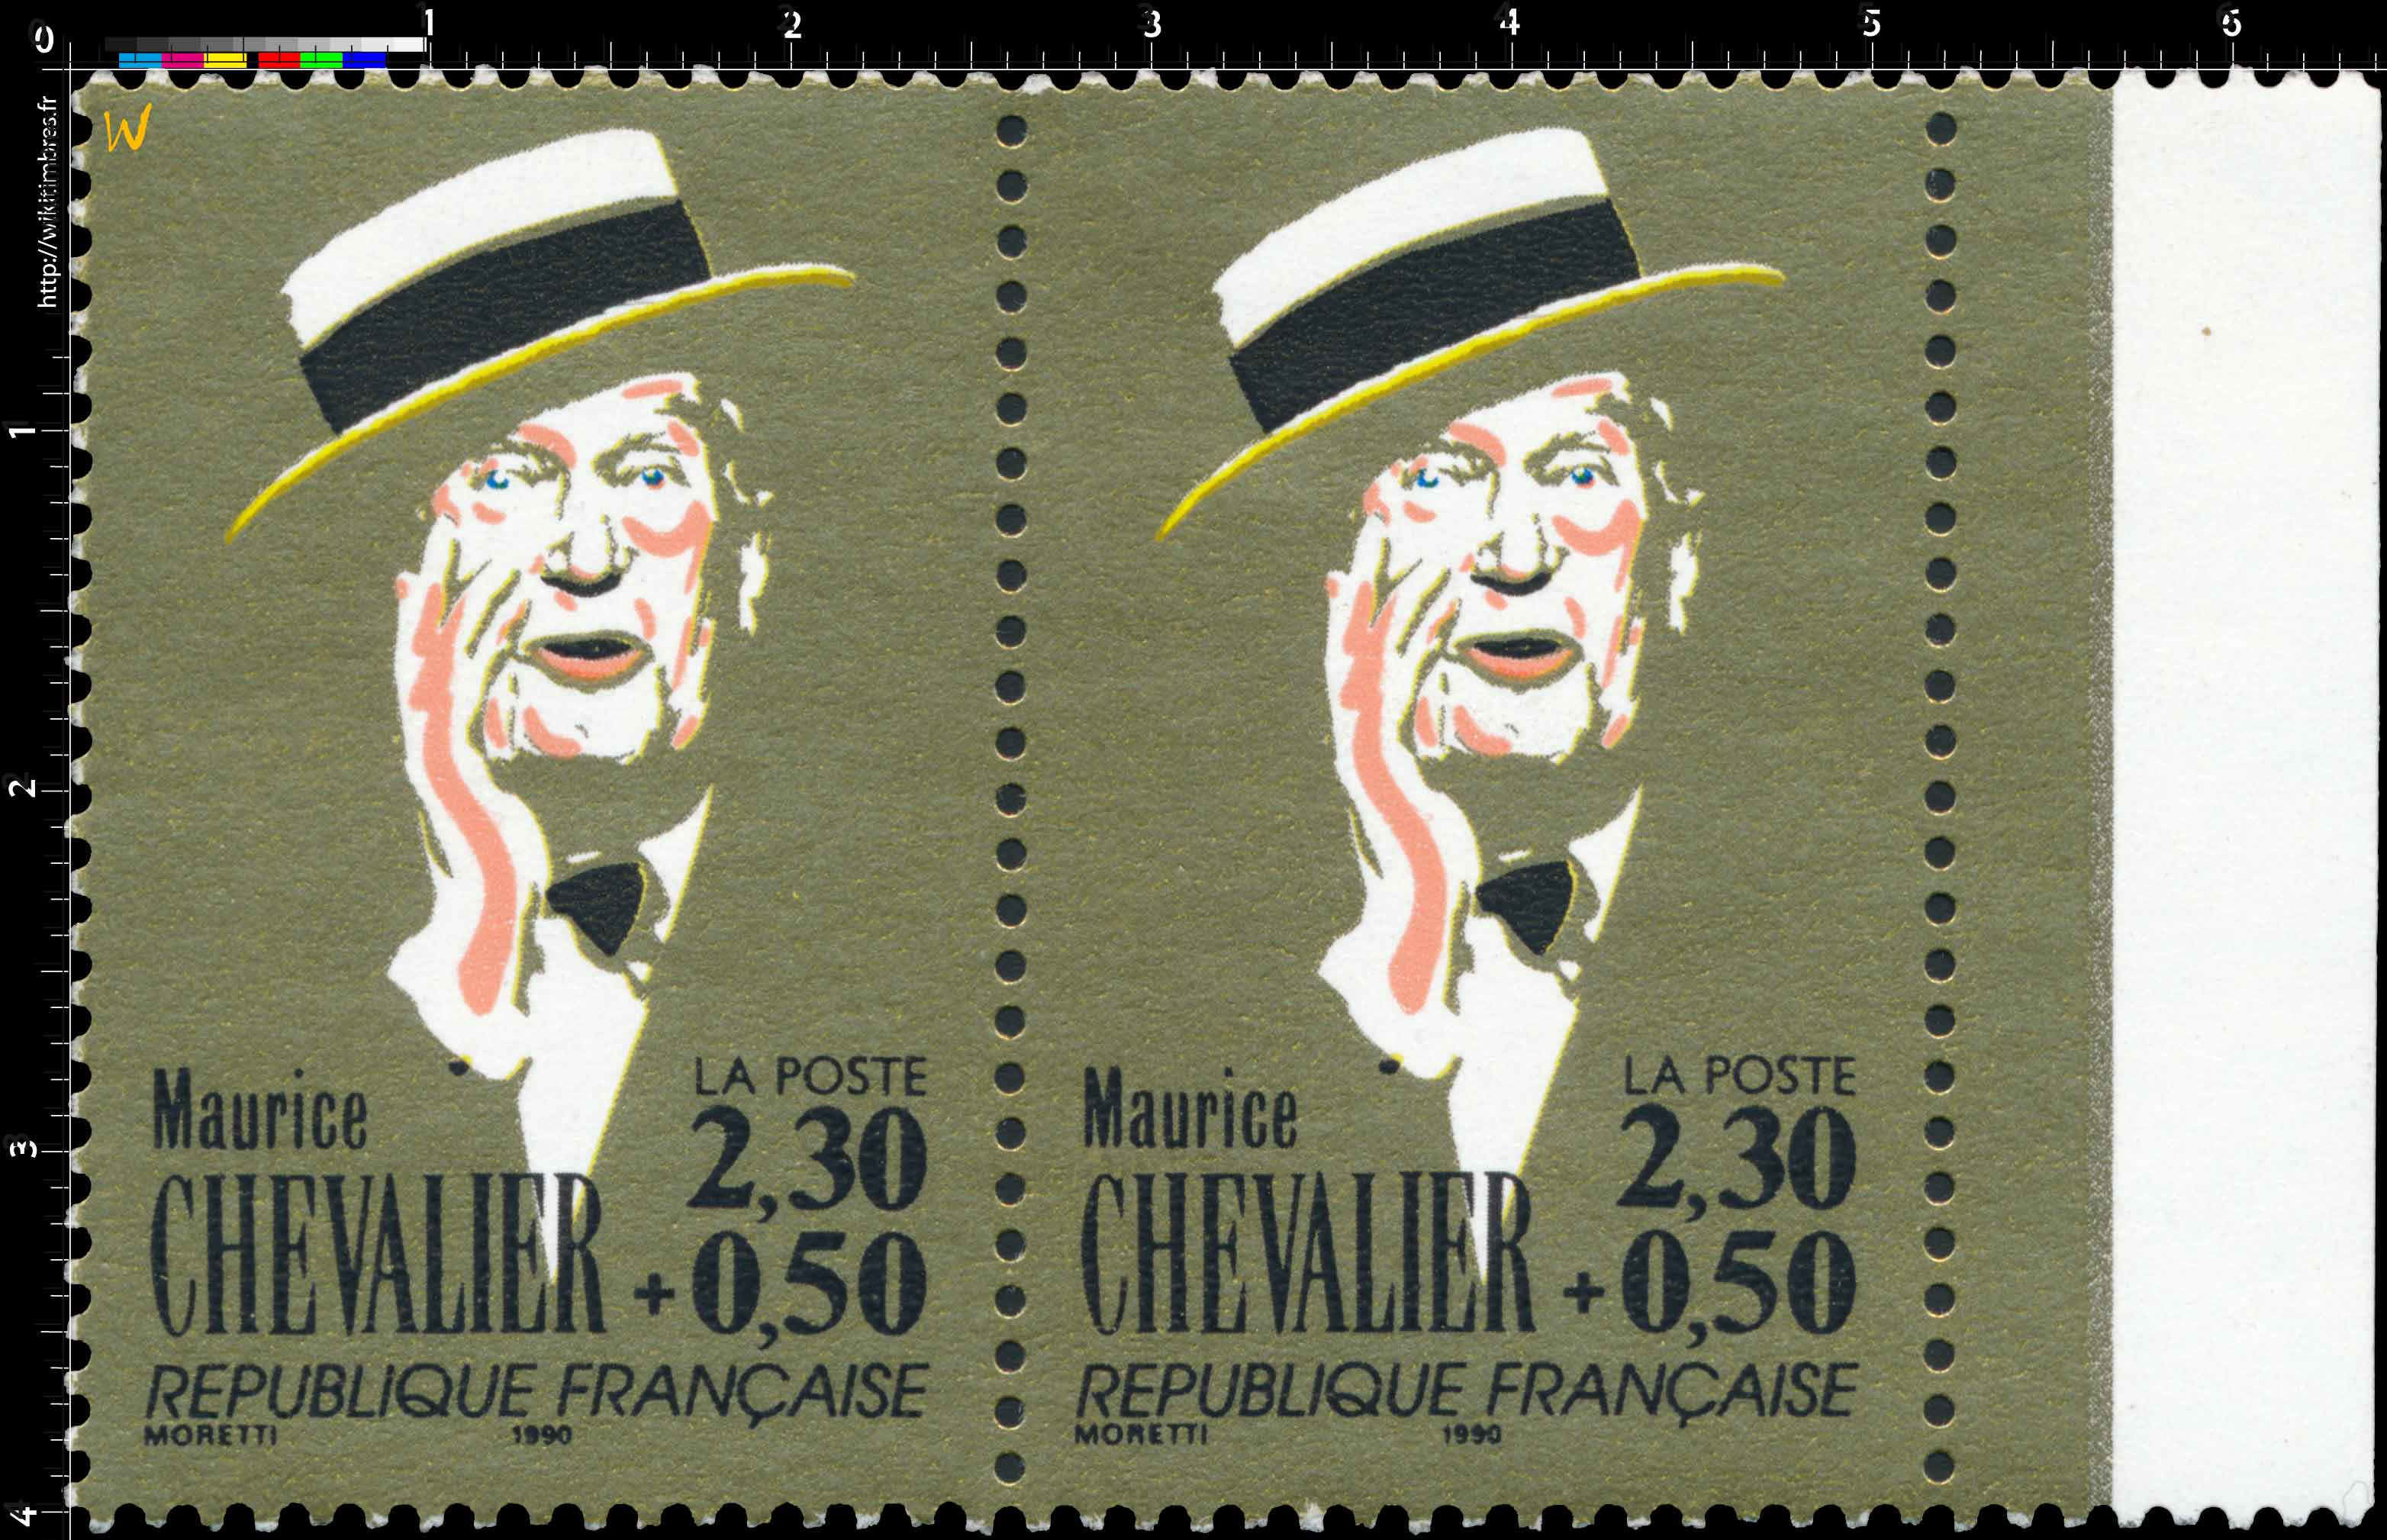 1990 Maurice CHEVALIER